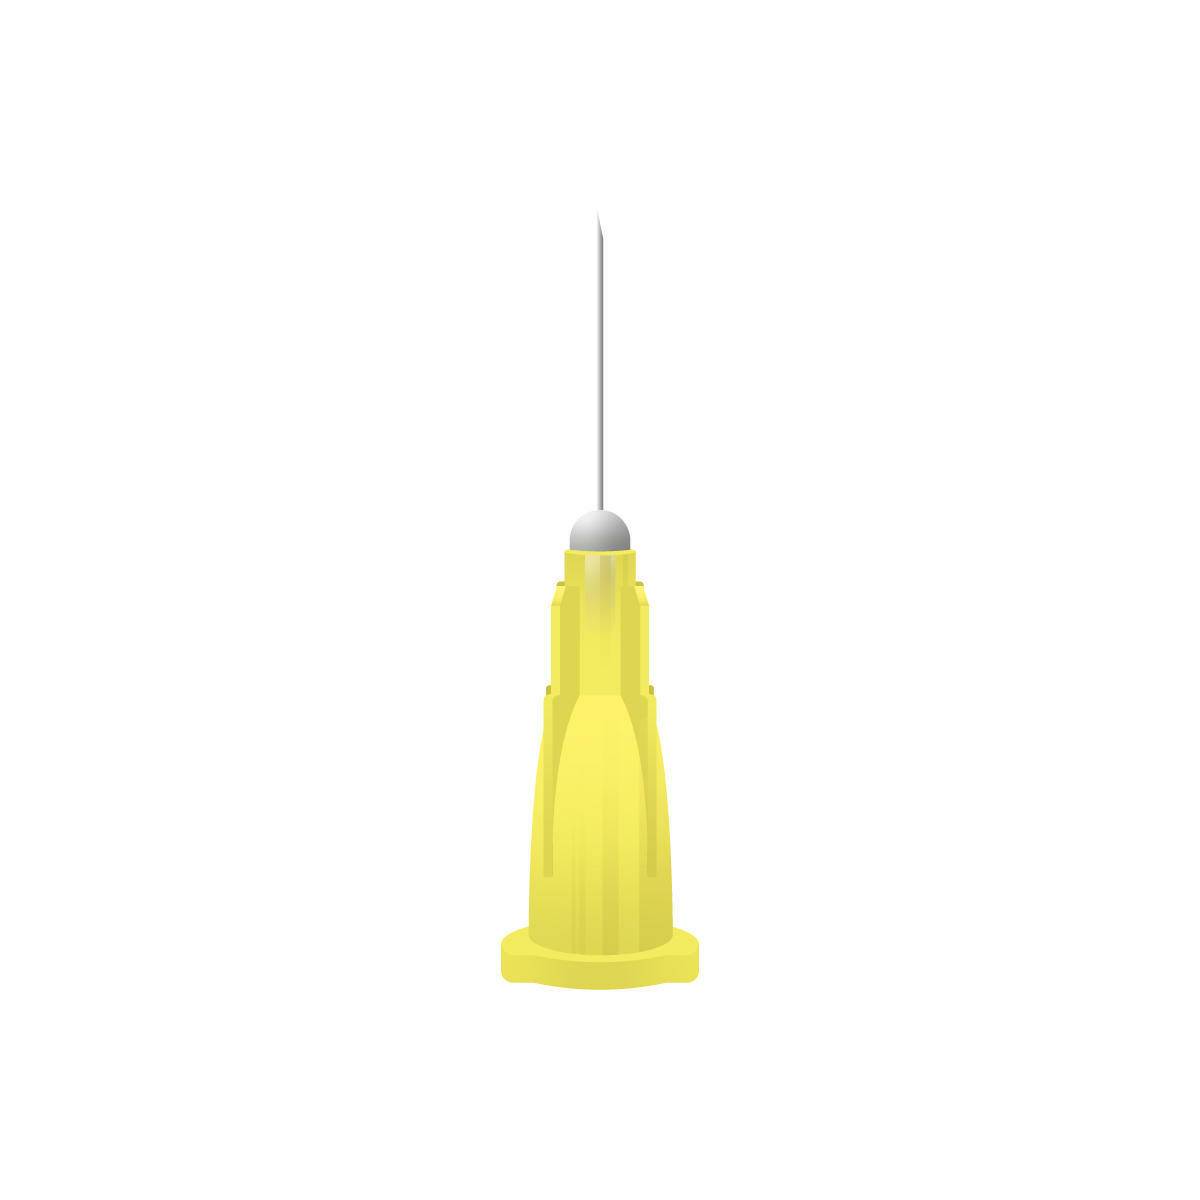 30g Yellow 0.5 inch BD Microlance Needles - UKMEDI